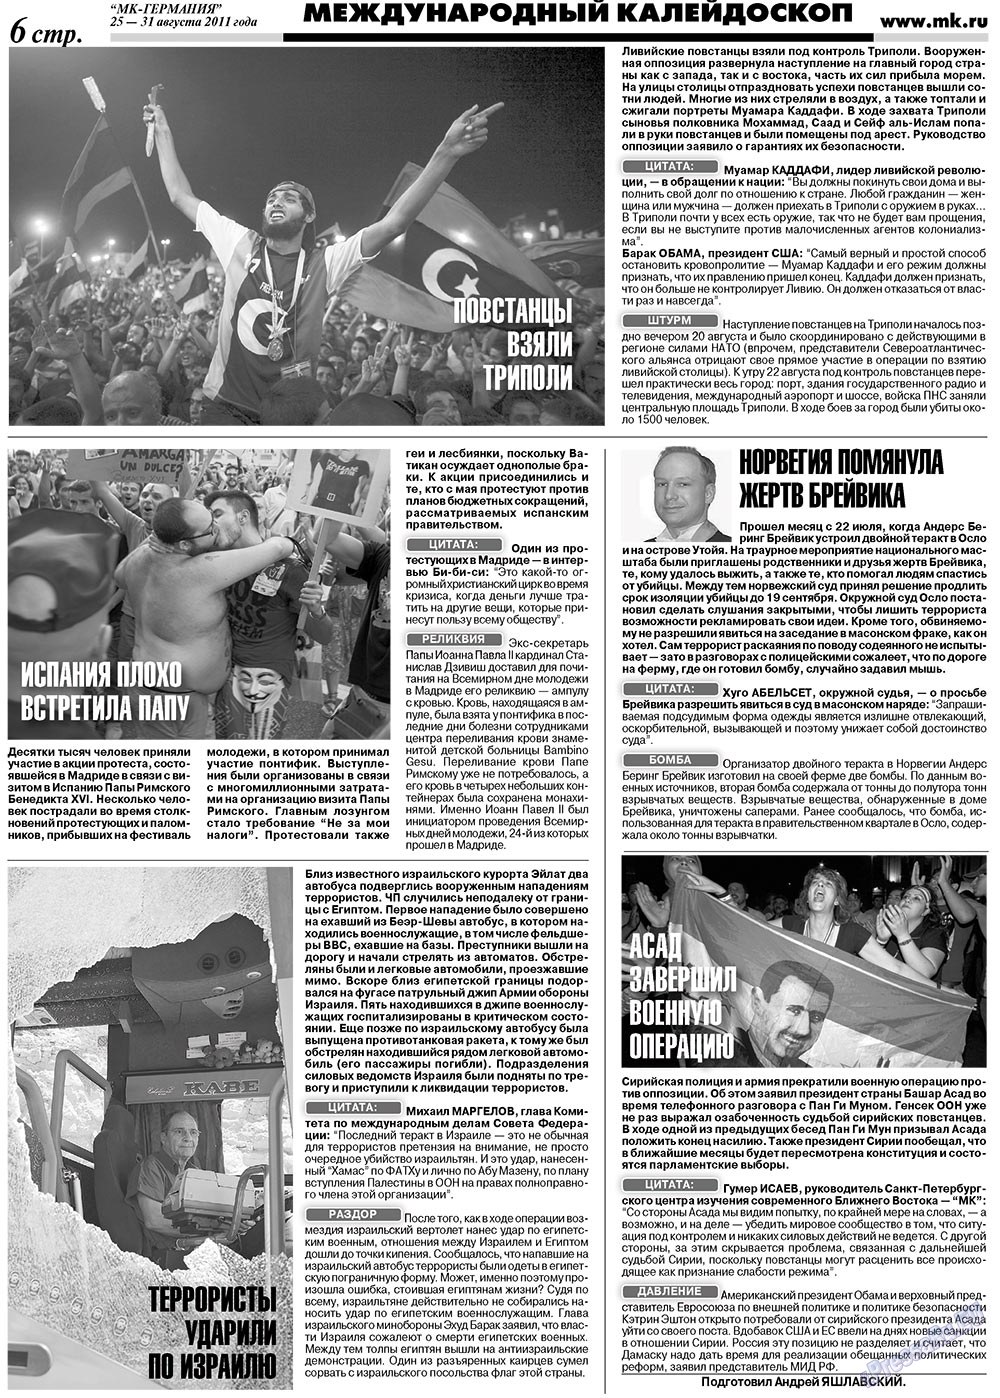 МК-Германия, газета. 2011 №34 стр.6